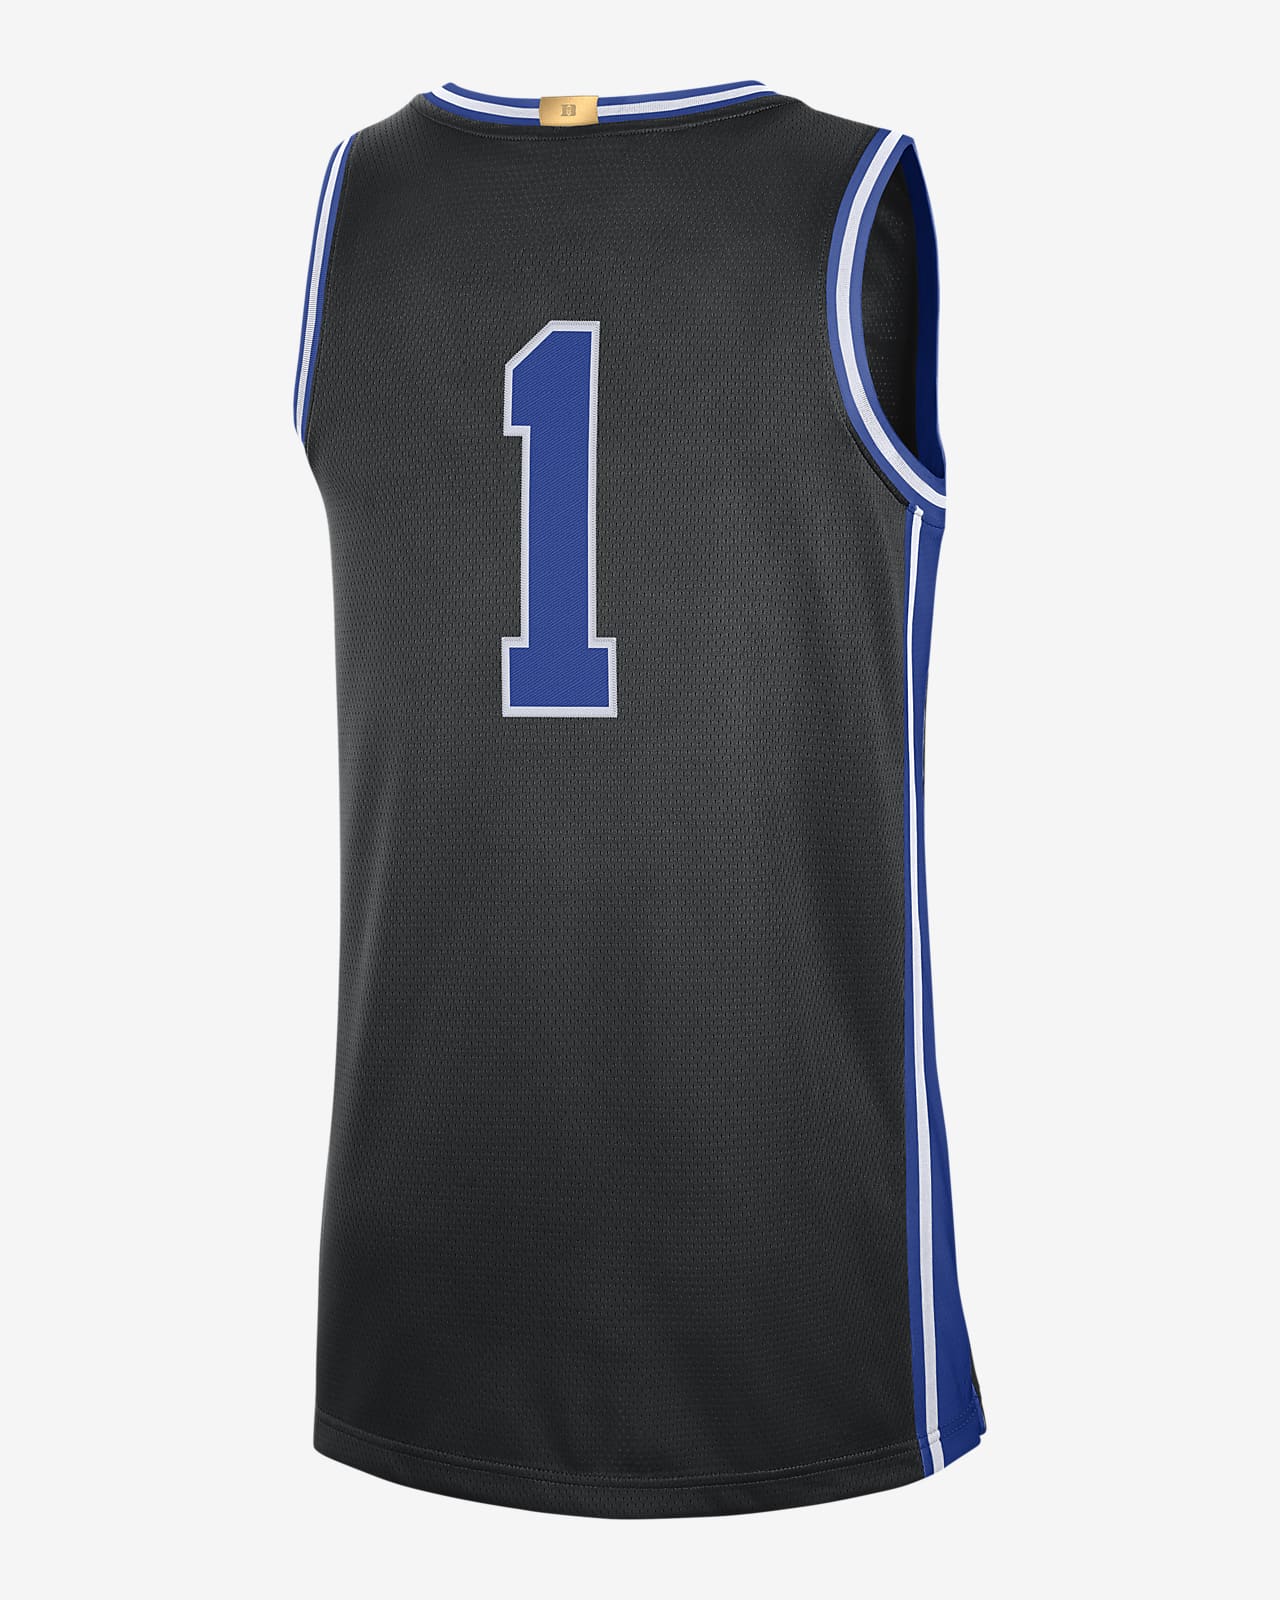 Duke Limited Men's Nike Dri-FIT College Basketball Jersey.